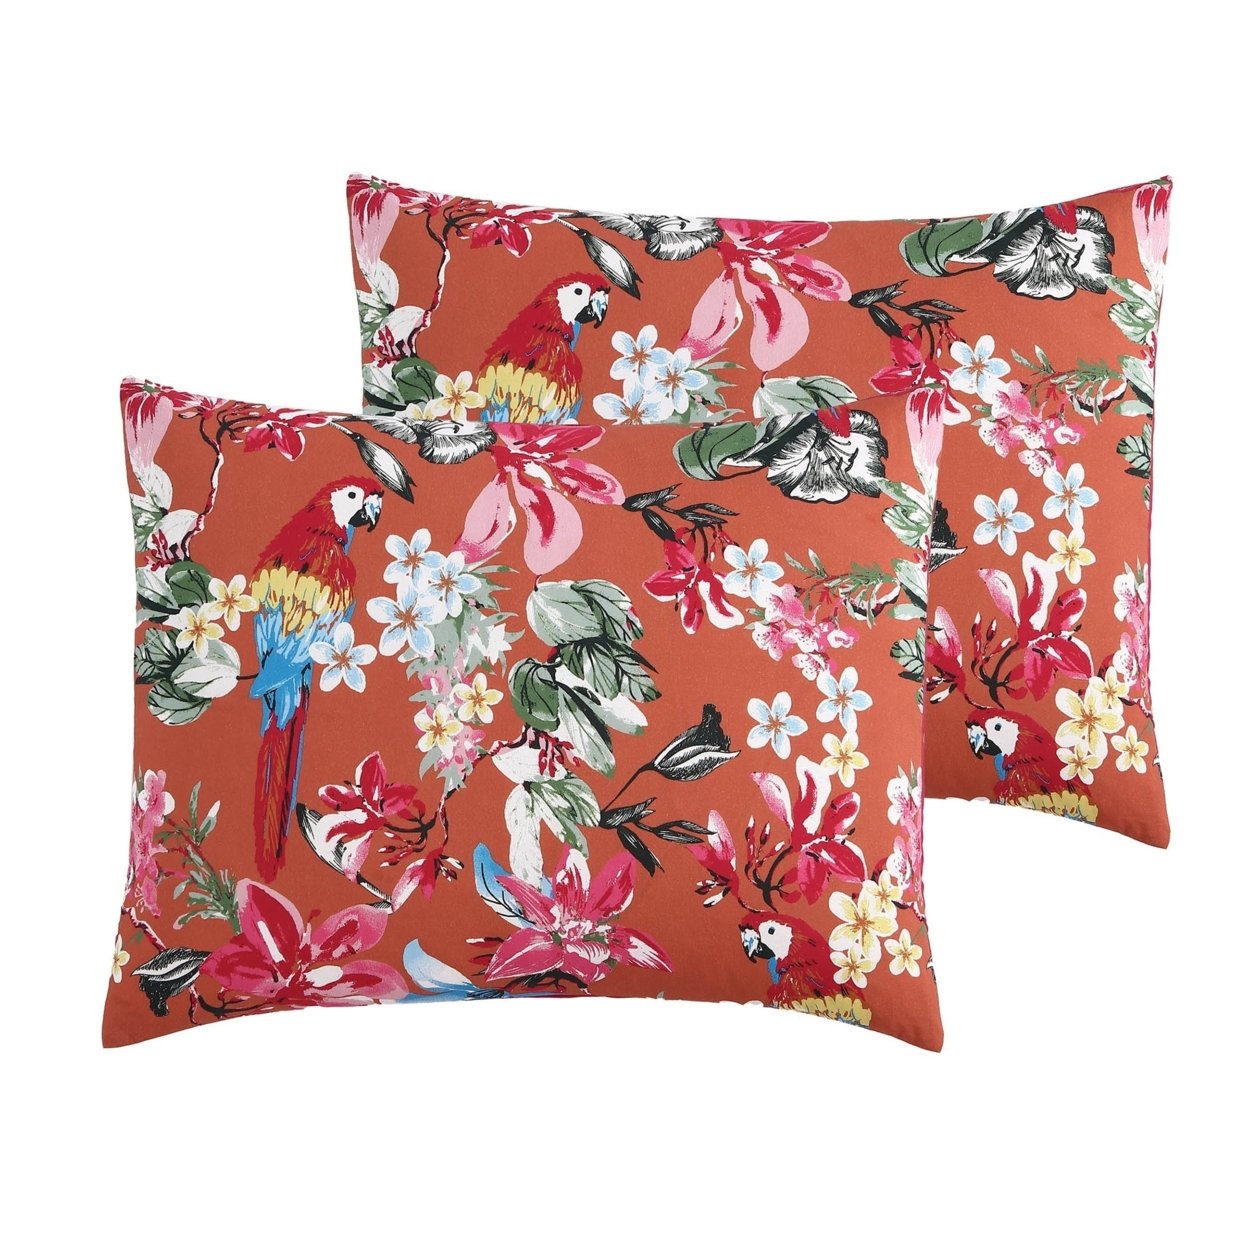 7 Piece King Comforter Set With Printed Floral Pattern, Multicolor- Saltoro Sherpi